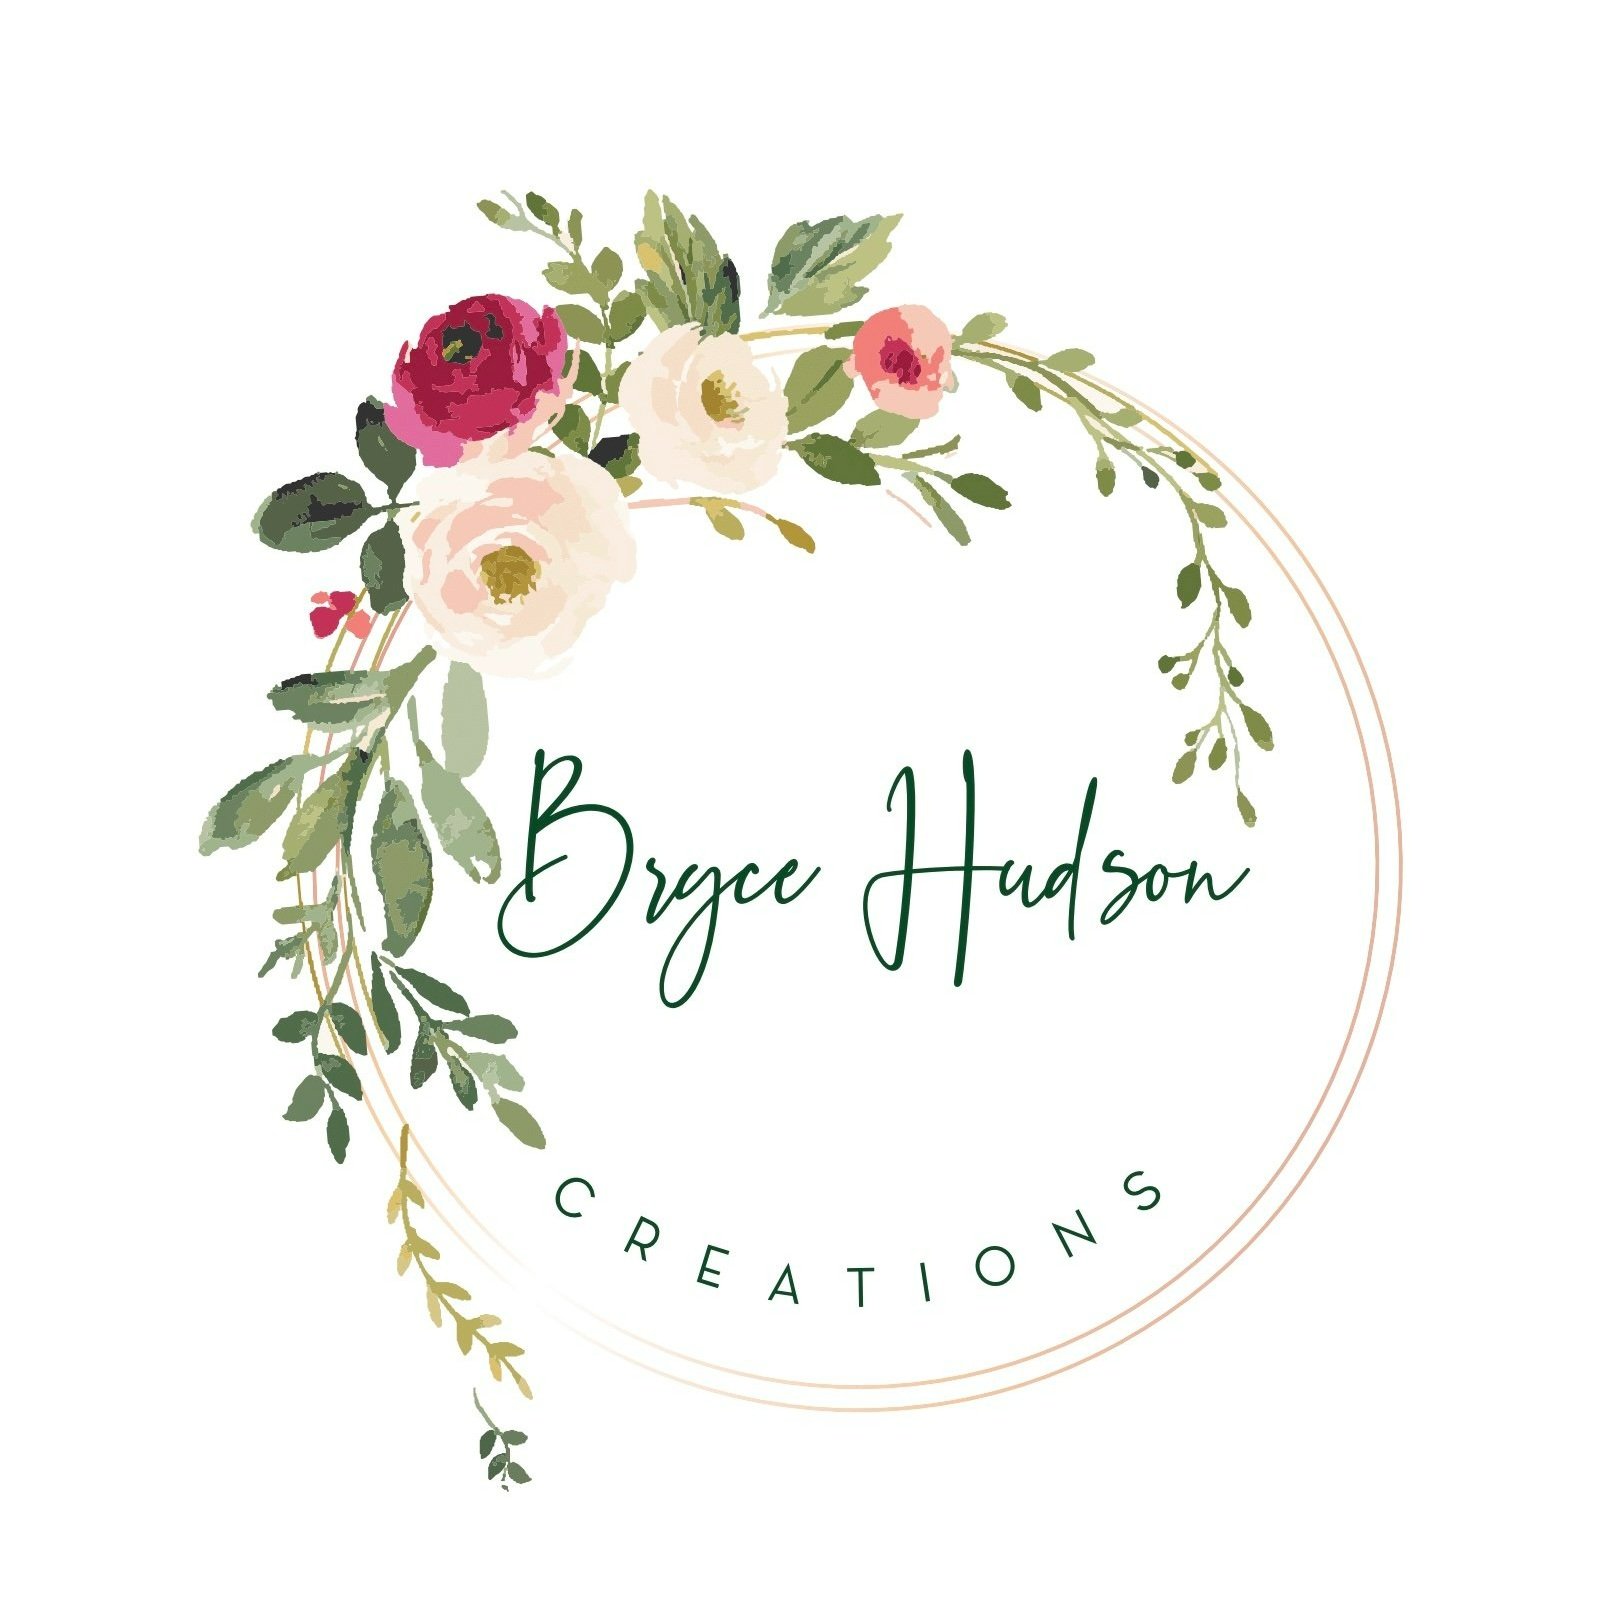 Bryce Hudson Creations